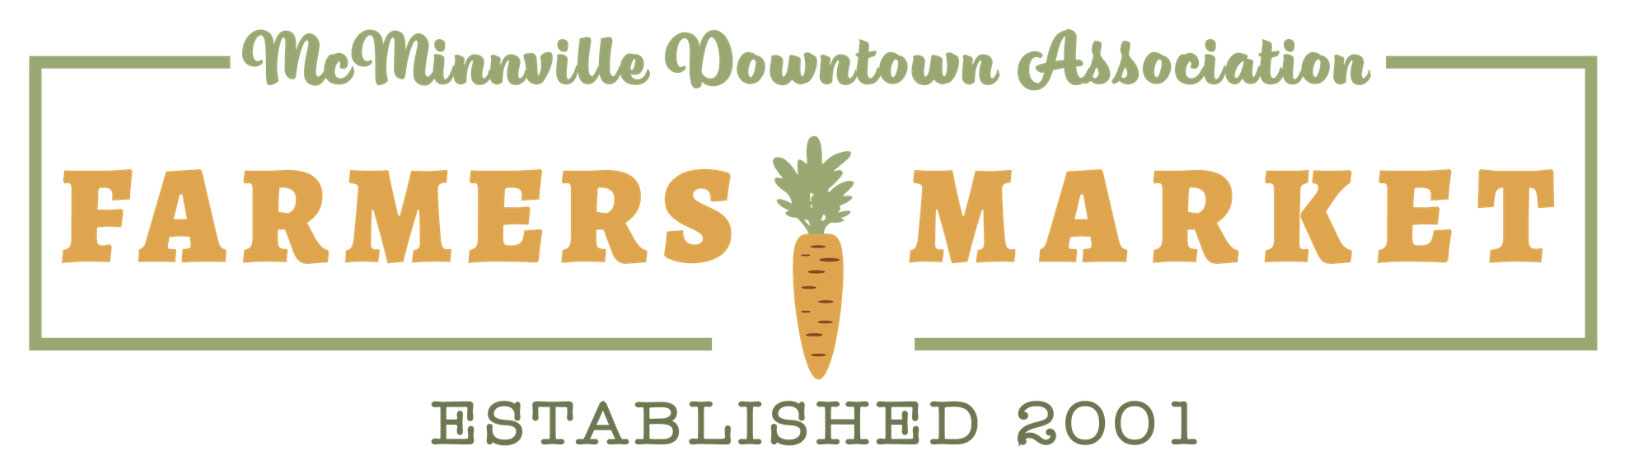 McMinnville Downtown Association Farmers Market